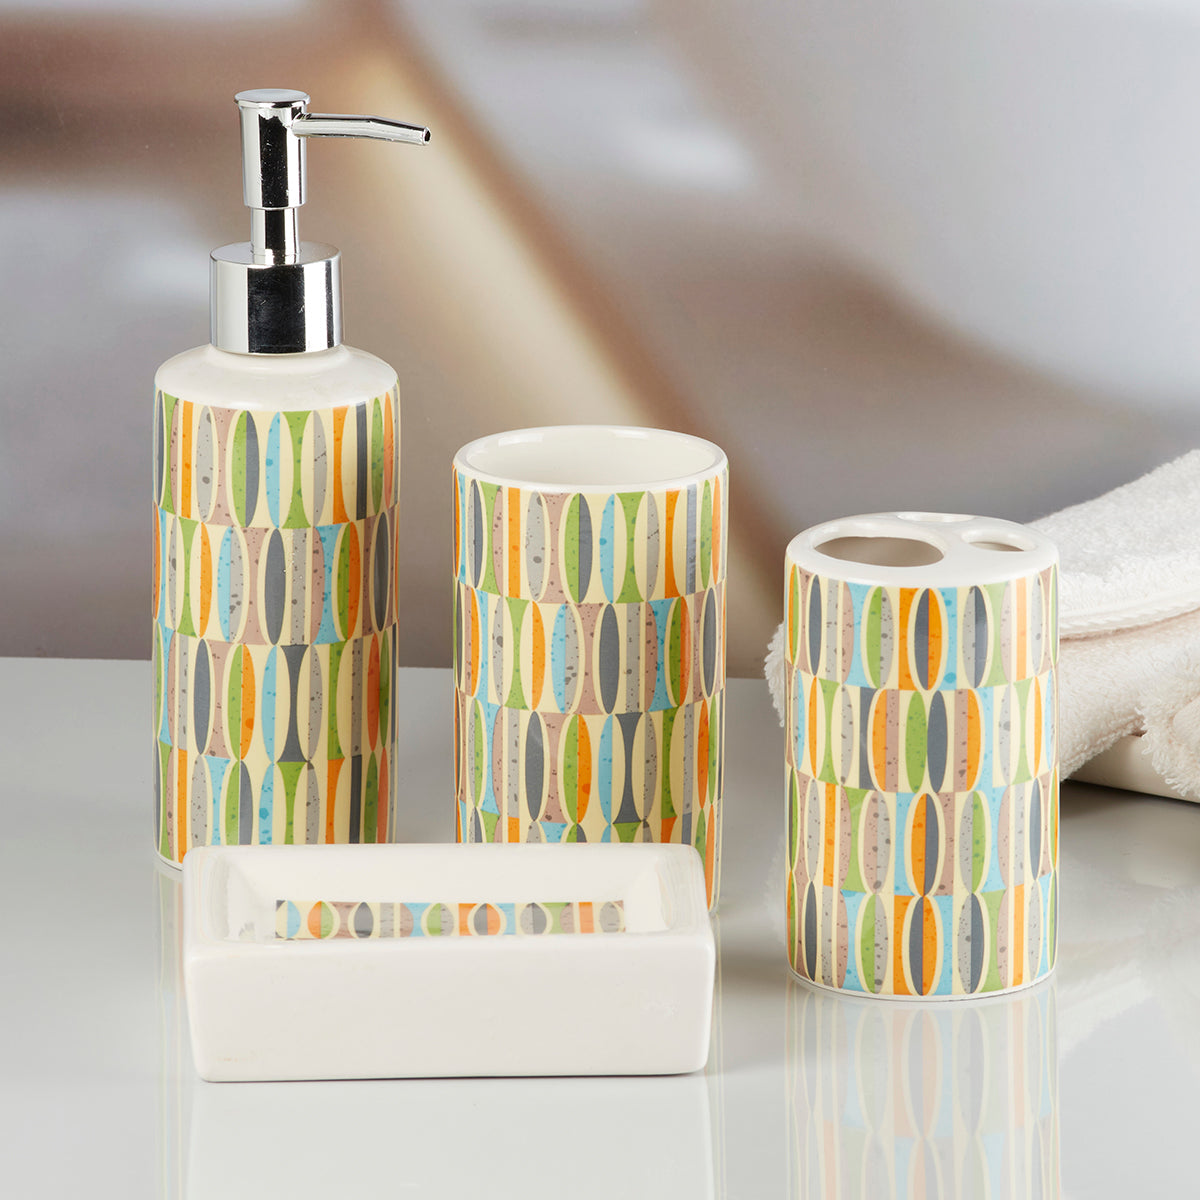 Ceramic Bathroom Accessories Set of 4 Bath Set with Soap Dispenser (10087)